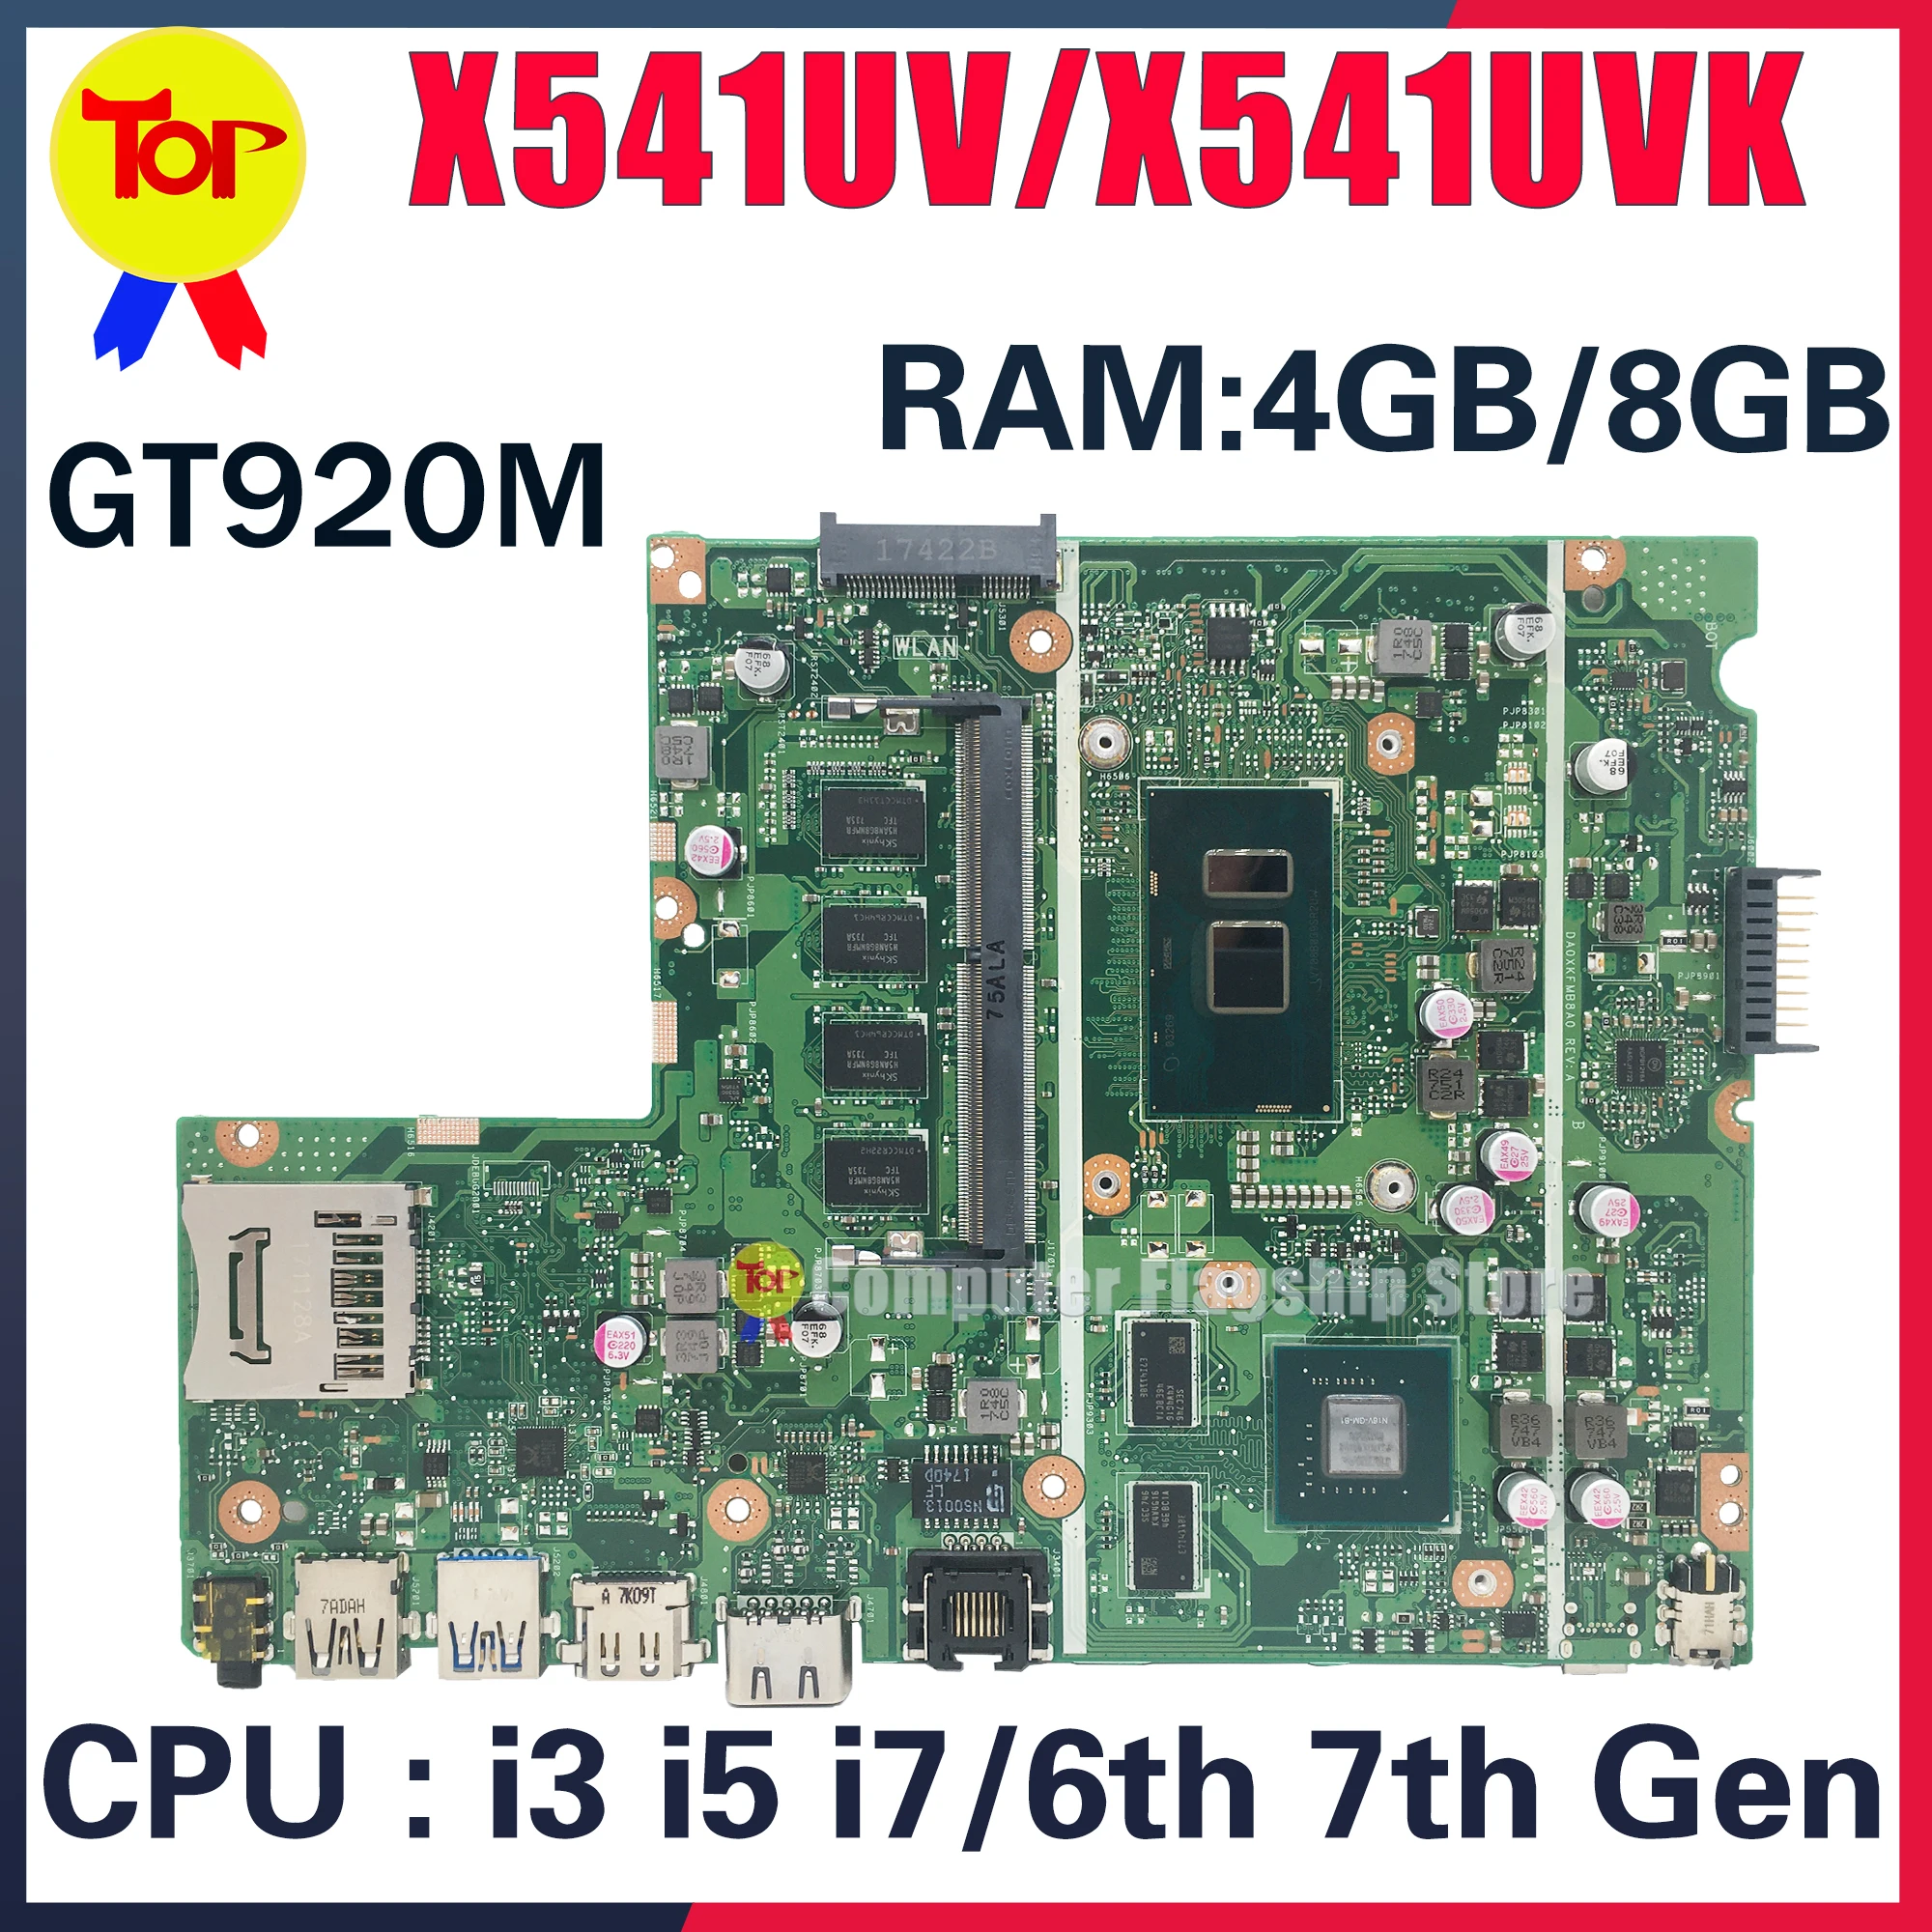 x541uv-laptop-motherboard-for-asus-x541uvk-x541uj-f541u-x541u-a541u-0g-4g-or-8g-i3-i5-i7-gt920m-mainboard-give-hdd-logic-board